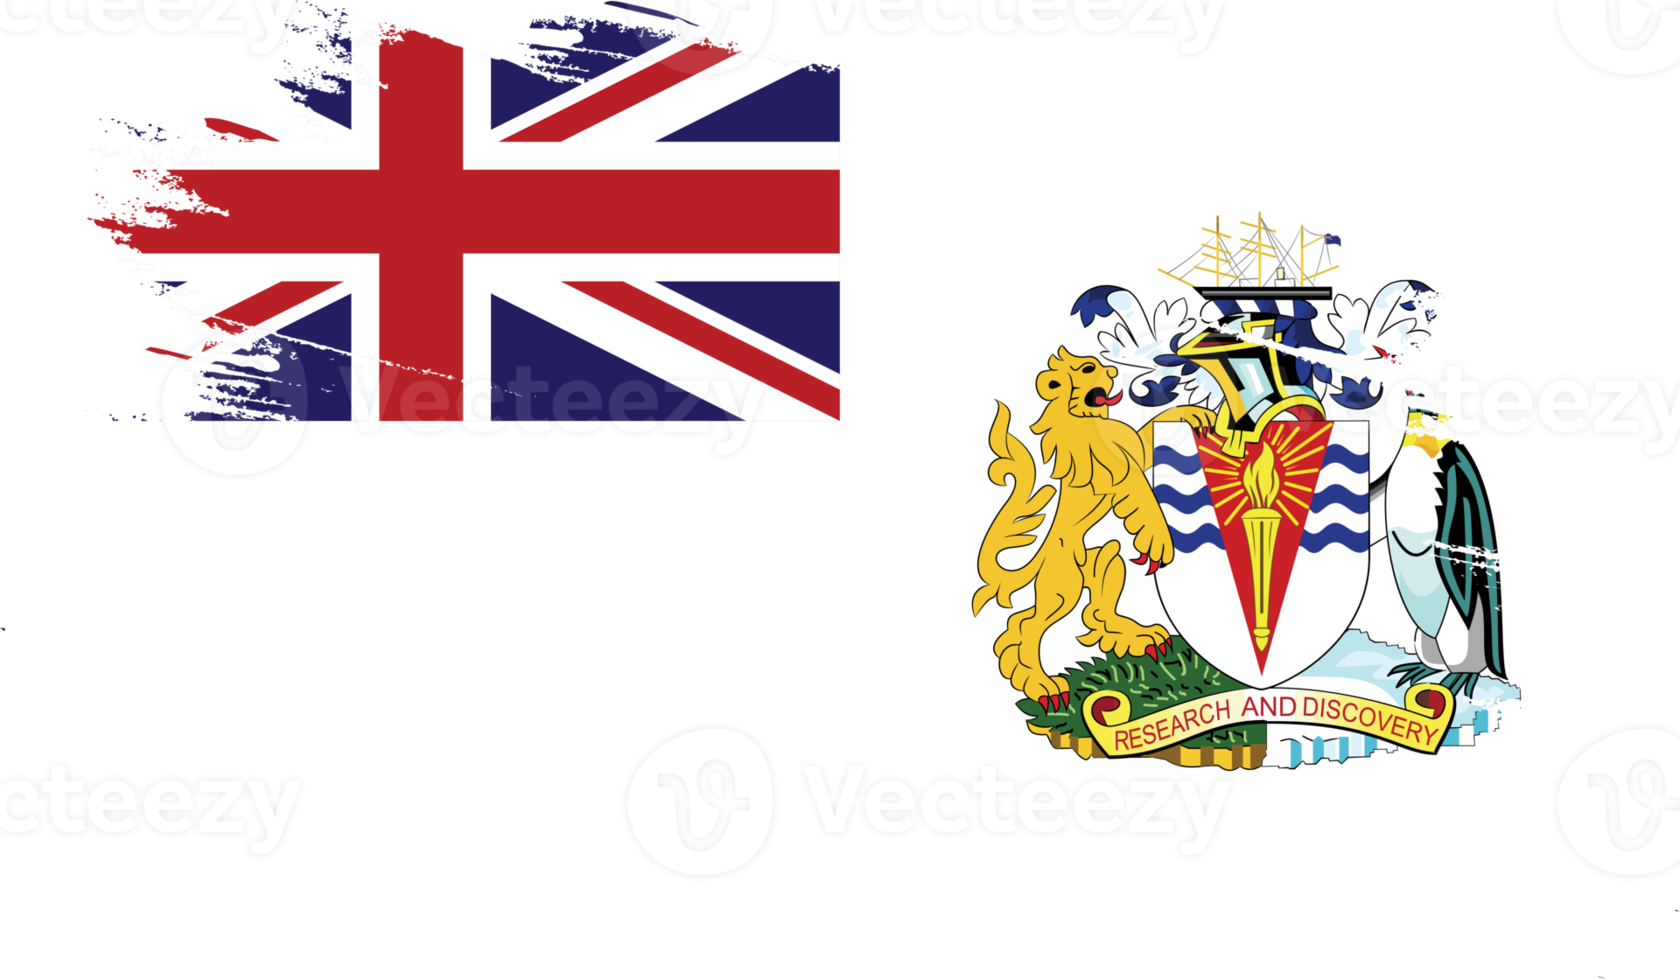 bandiera del territorio antartico britannico con texture grunge png